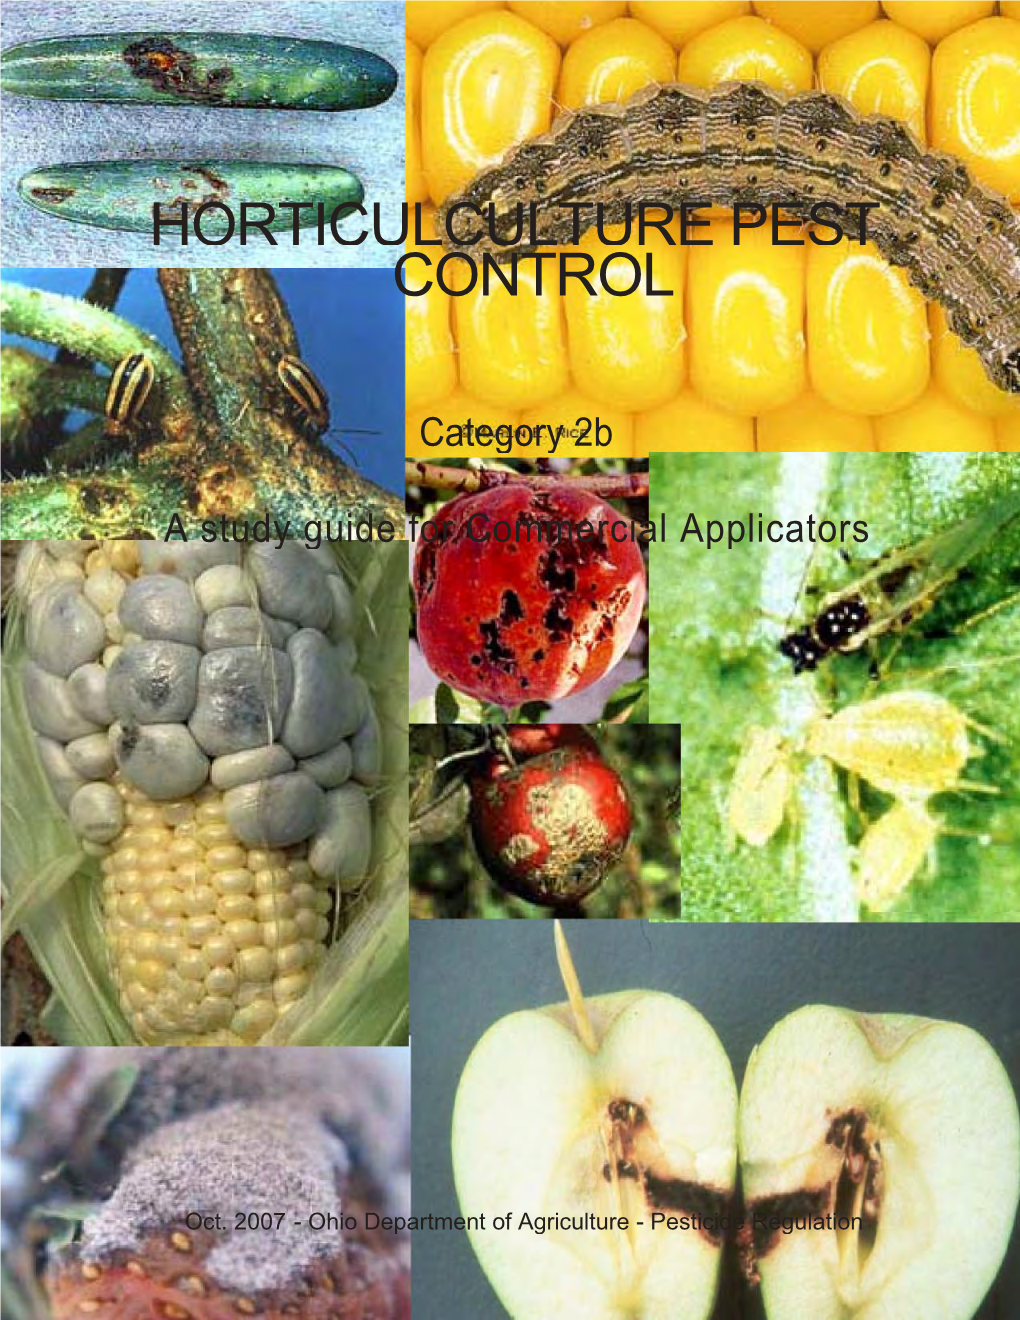 Horticulculture Pest Control